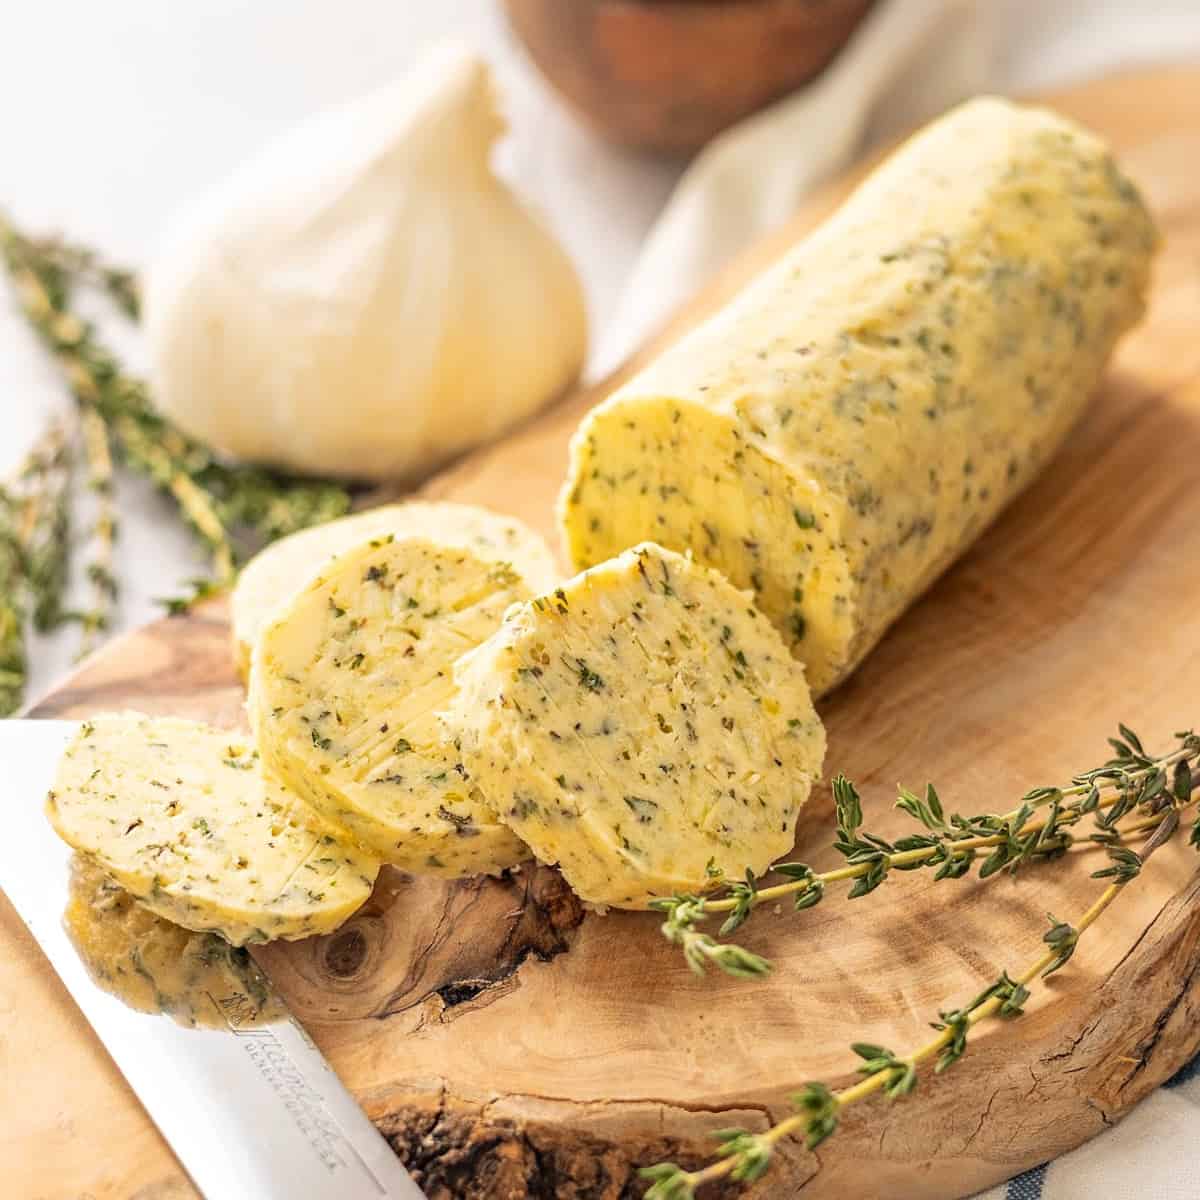 What Herbs Go In Garlic Butter